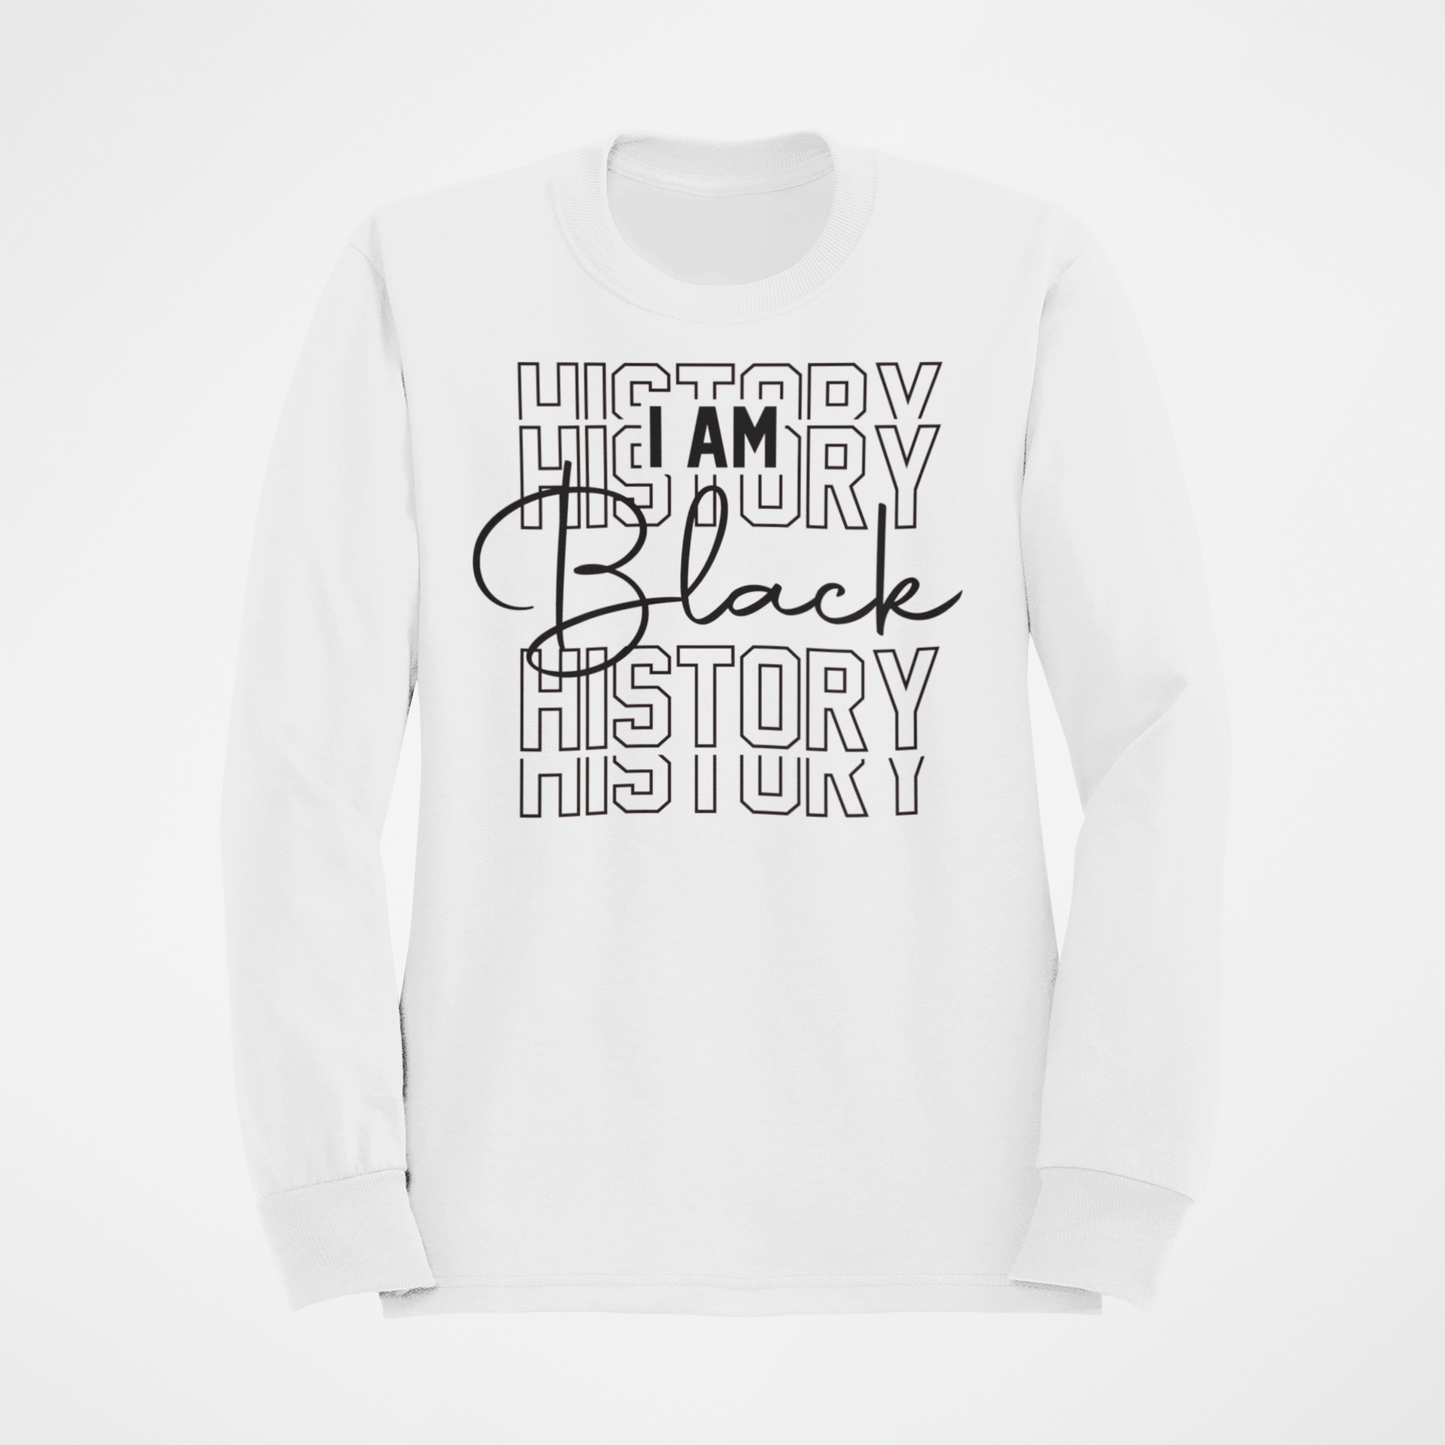 I Am Black History Teacher T-shirt